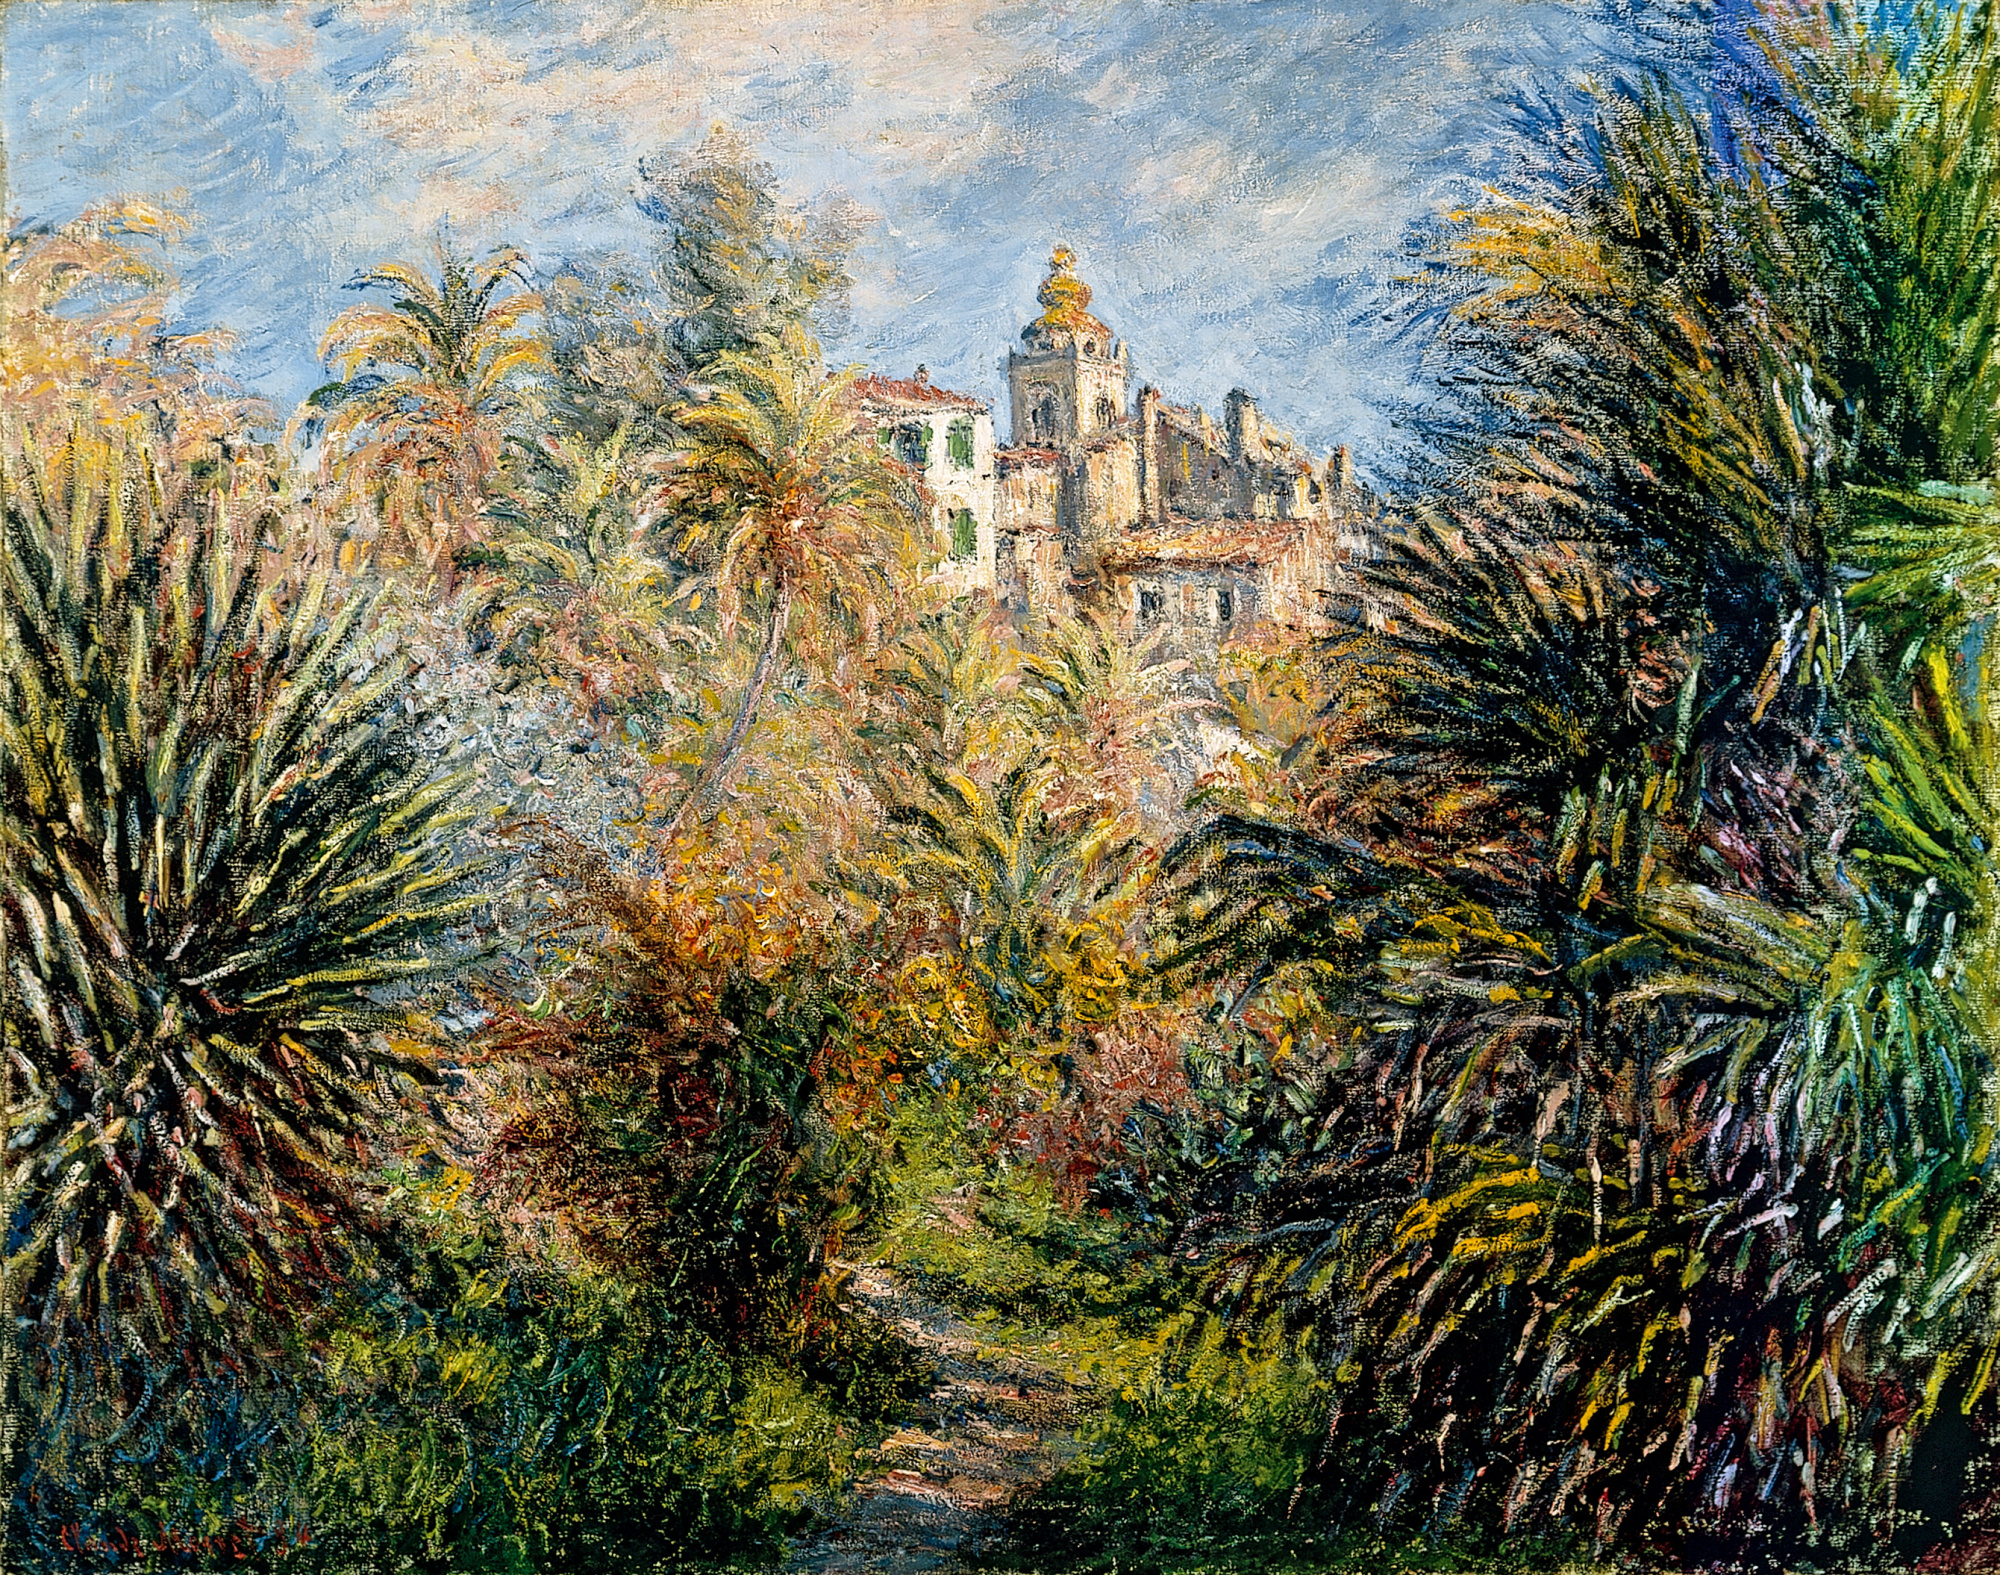 Garden art for August by Monet